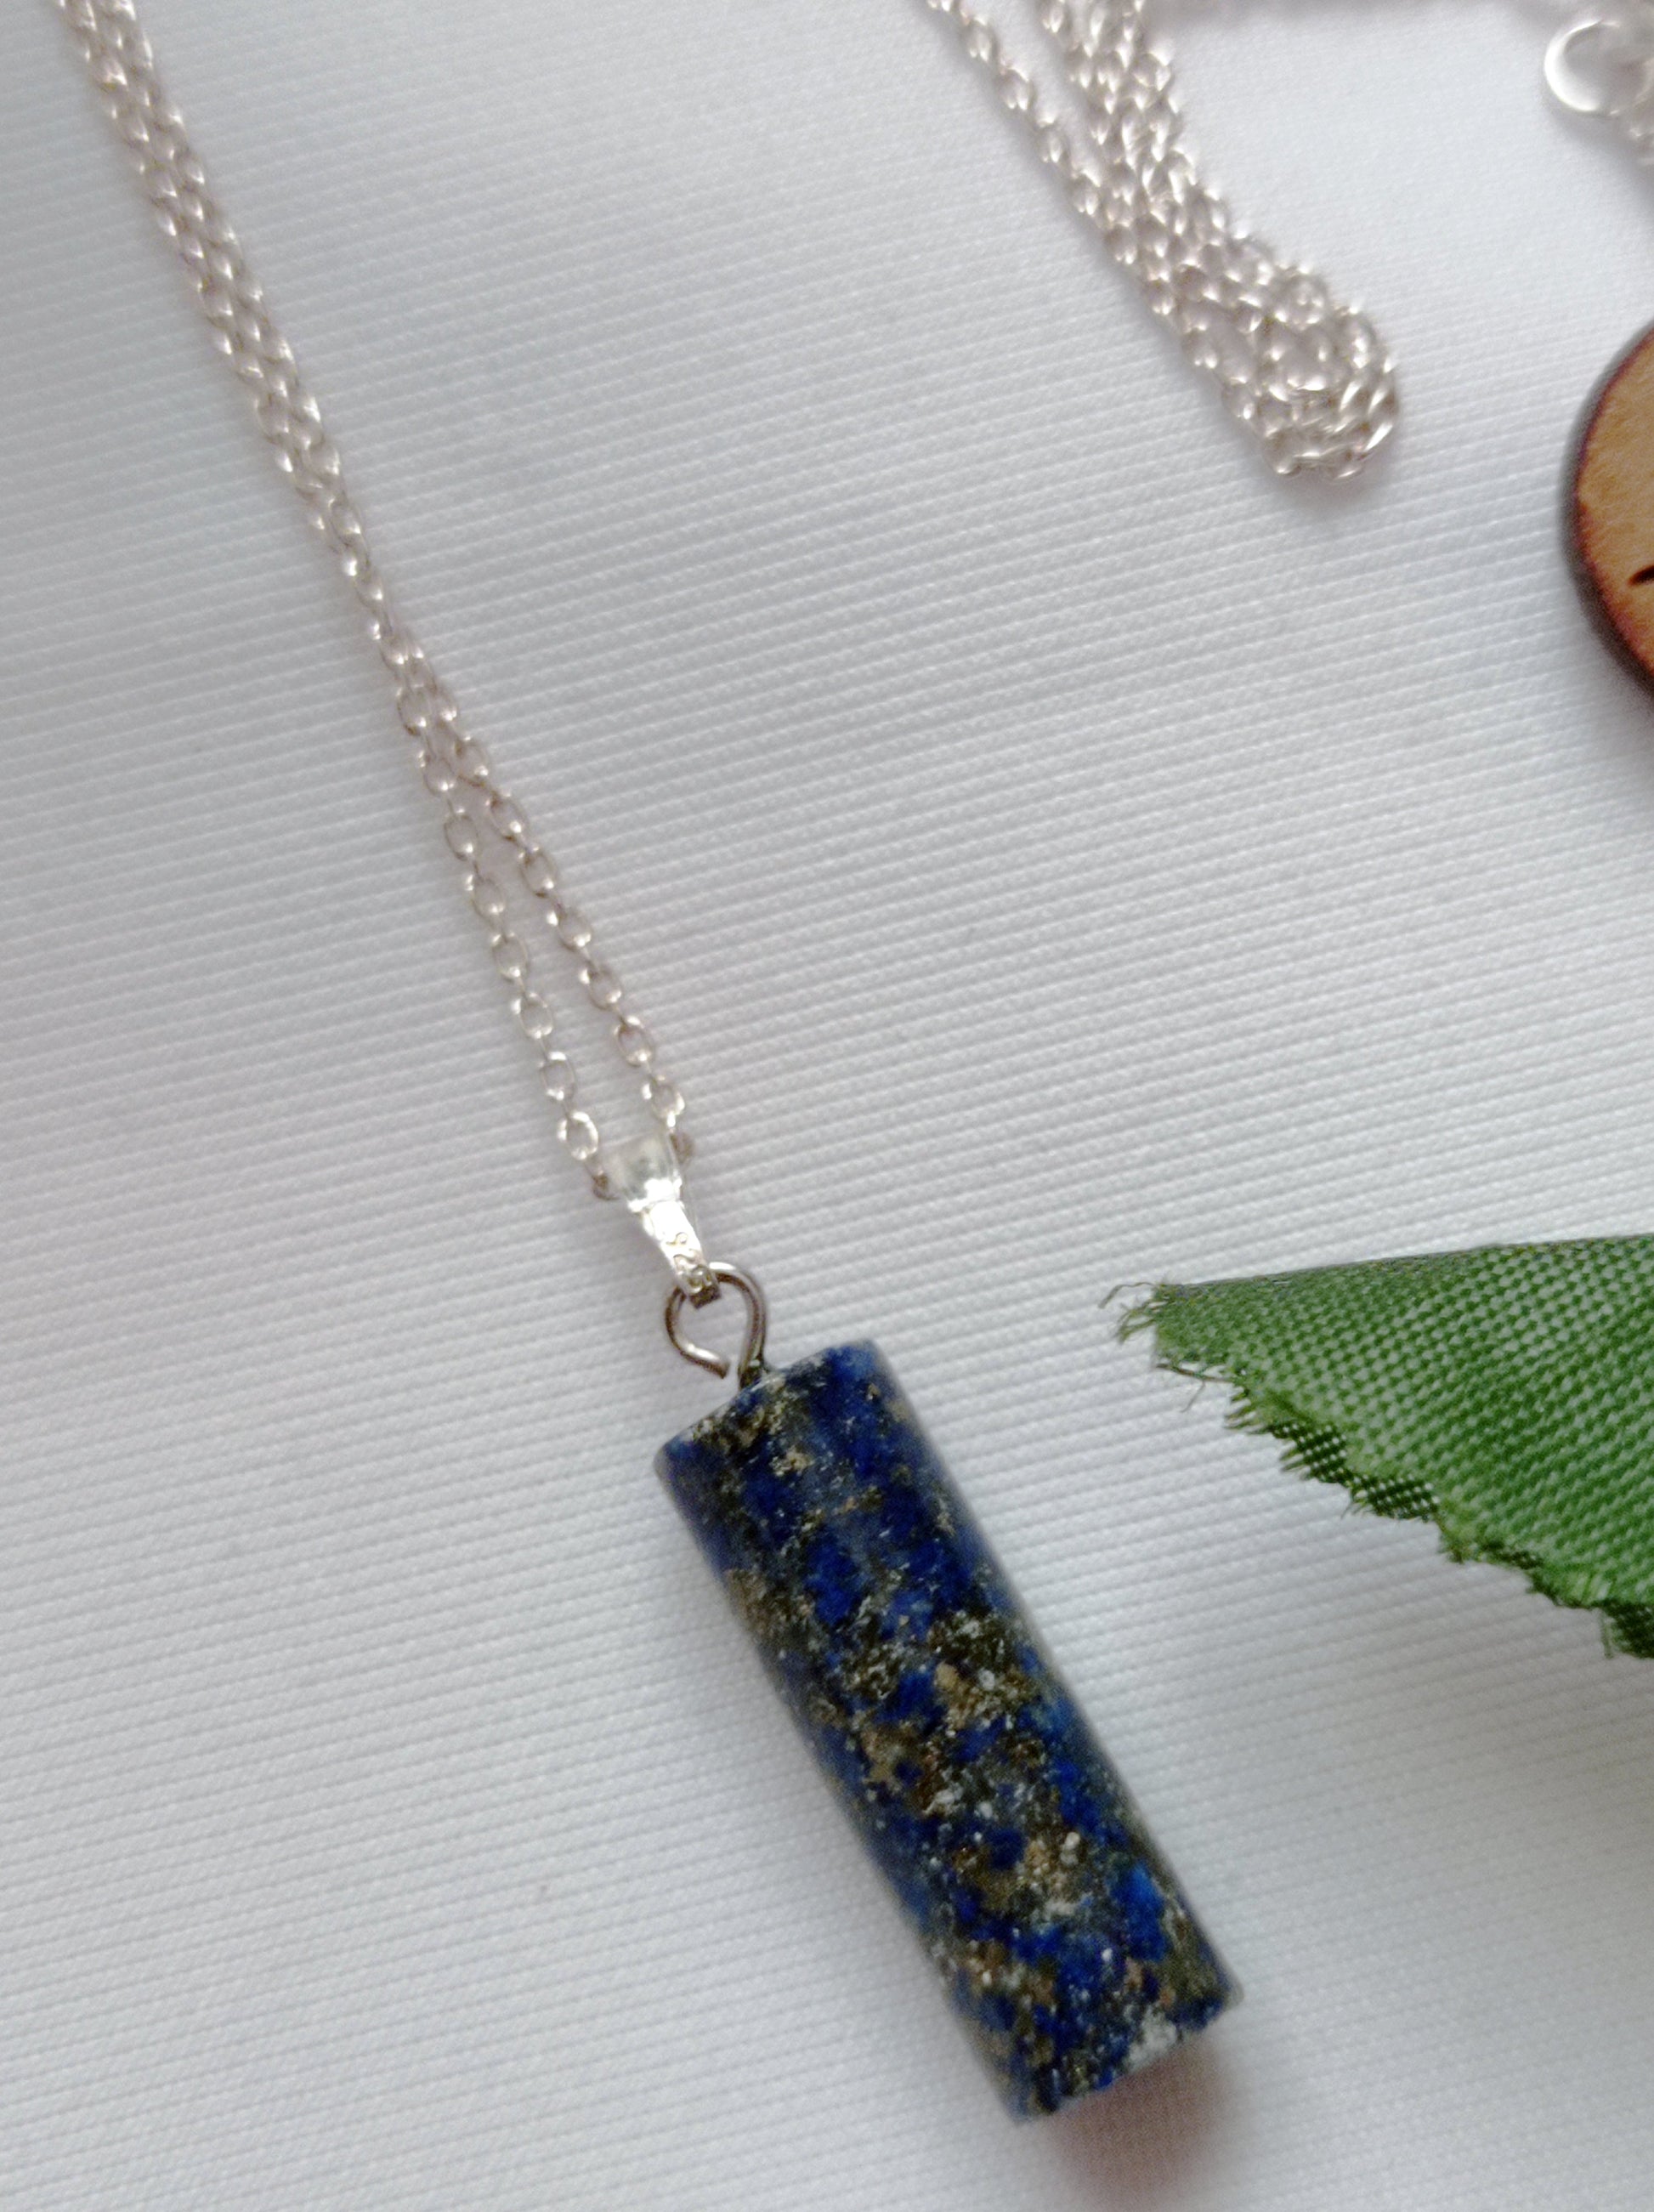 Lapis Lazuli Necklace, Lapis Lazuli Pendant, Sterling Silver Necklace, Gemstone Pendant Necklace | by nlanlaVictory-2